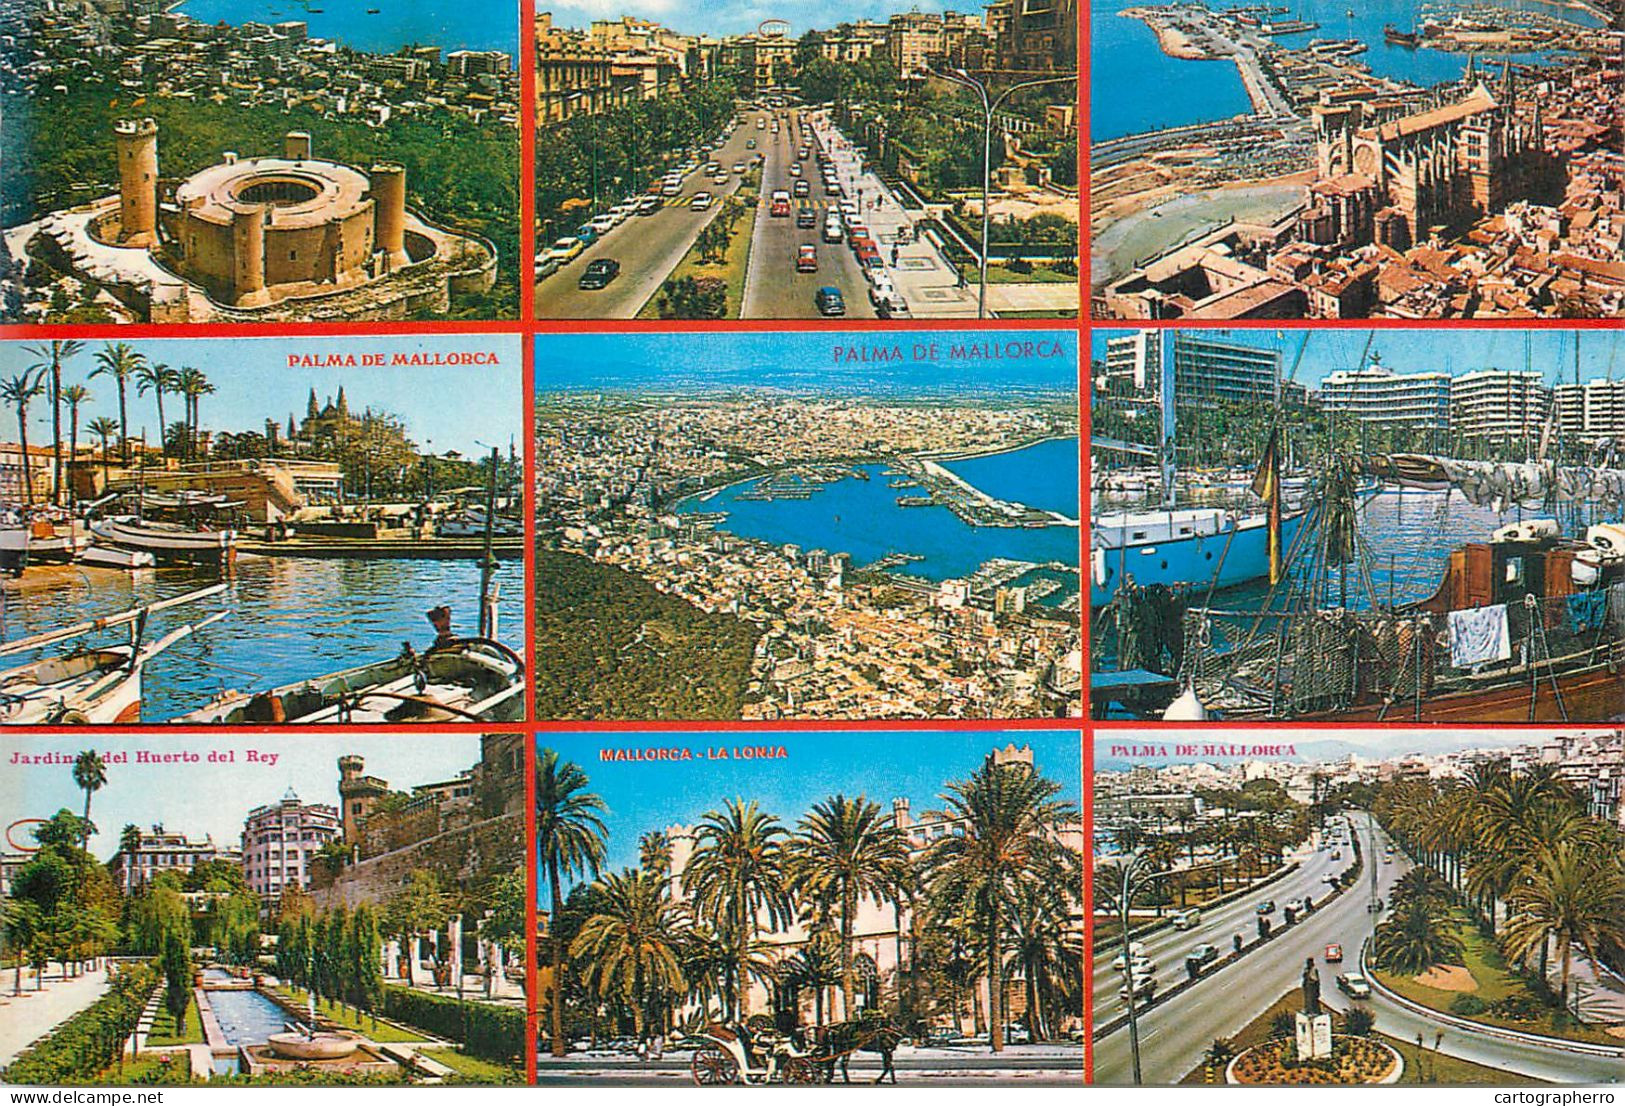 Navigation Sailing Vessels & Boats Themed Postcard Palma De Mallorca Harbour - Sailing Vessels